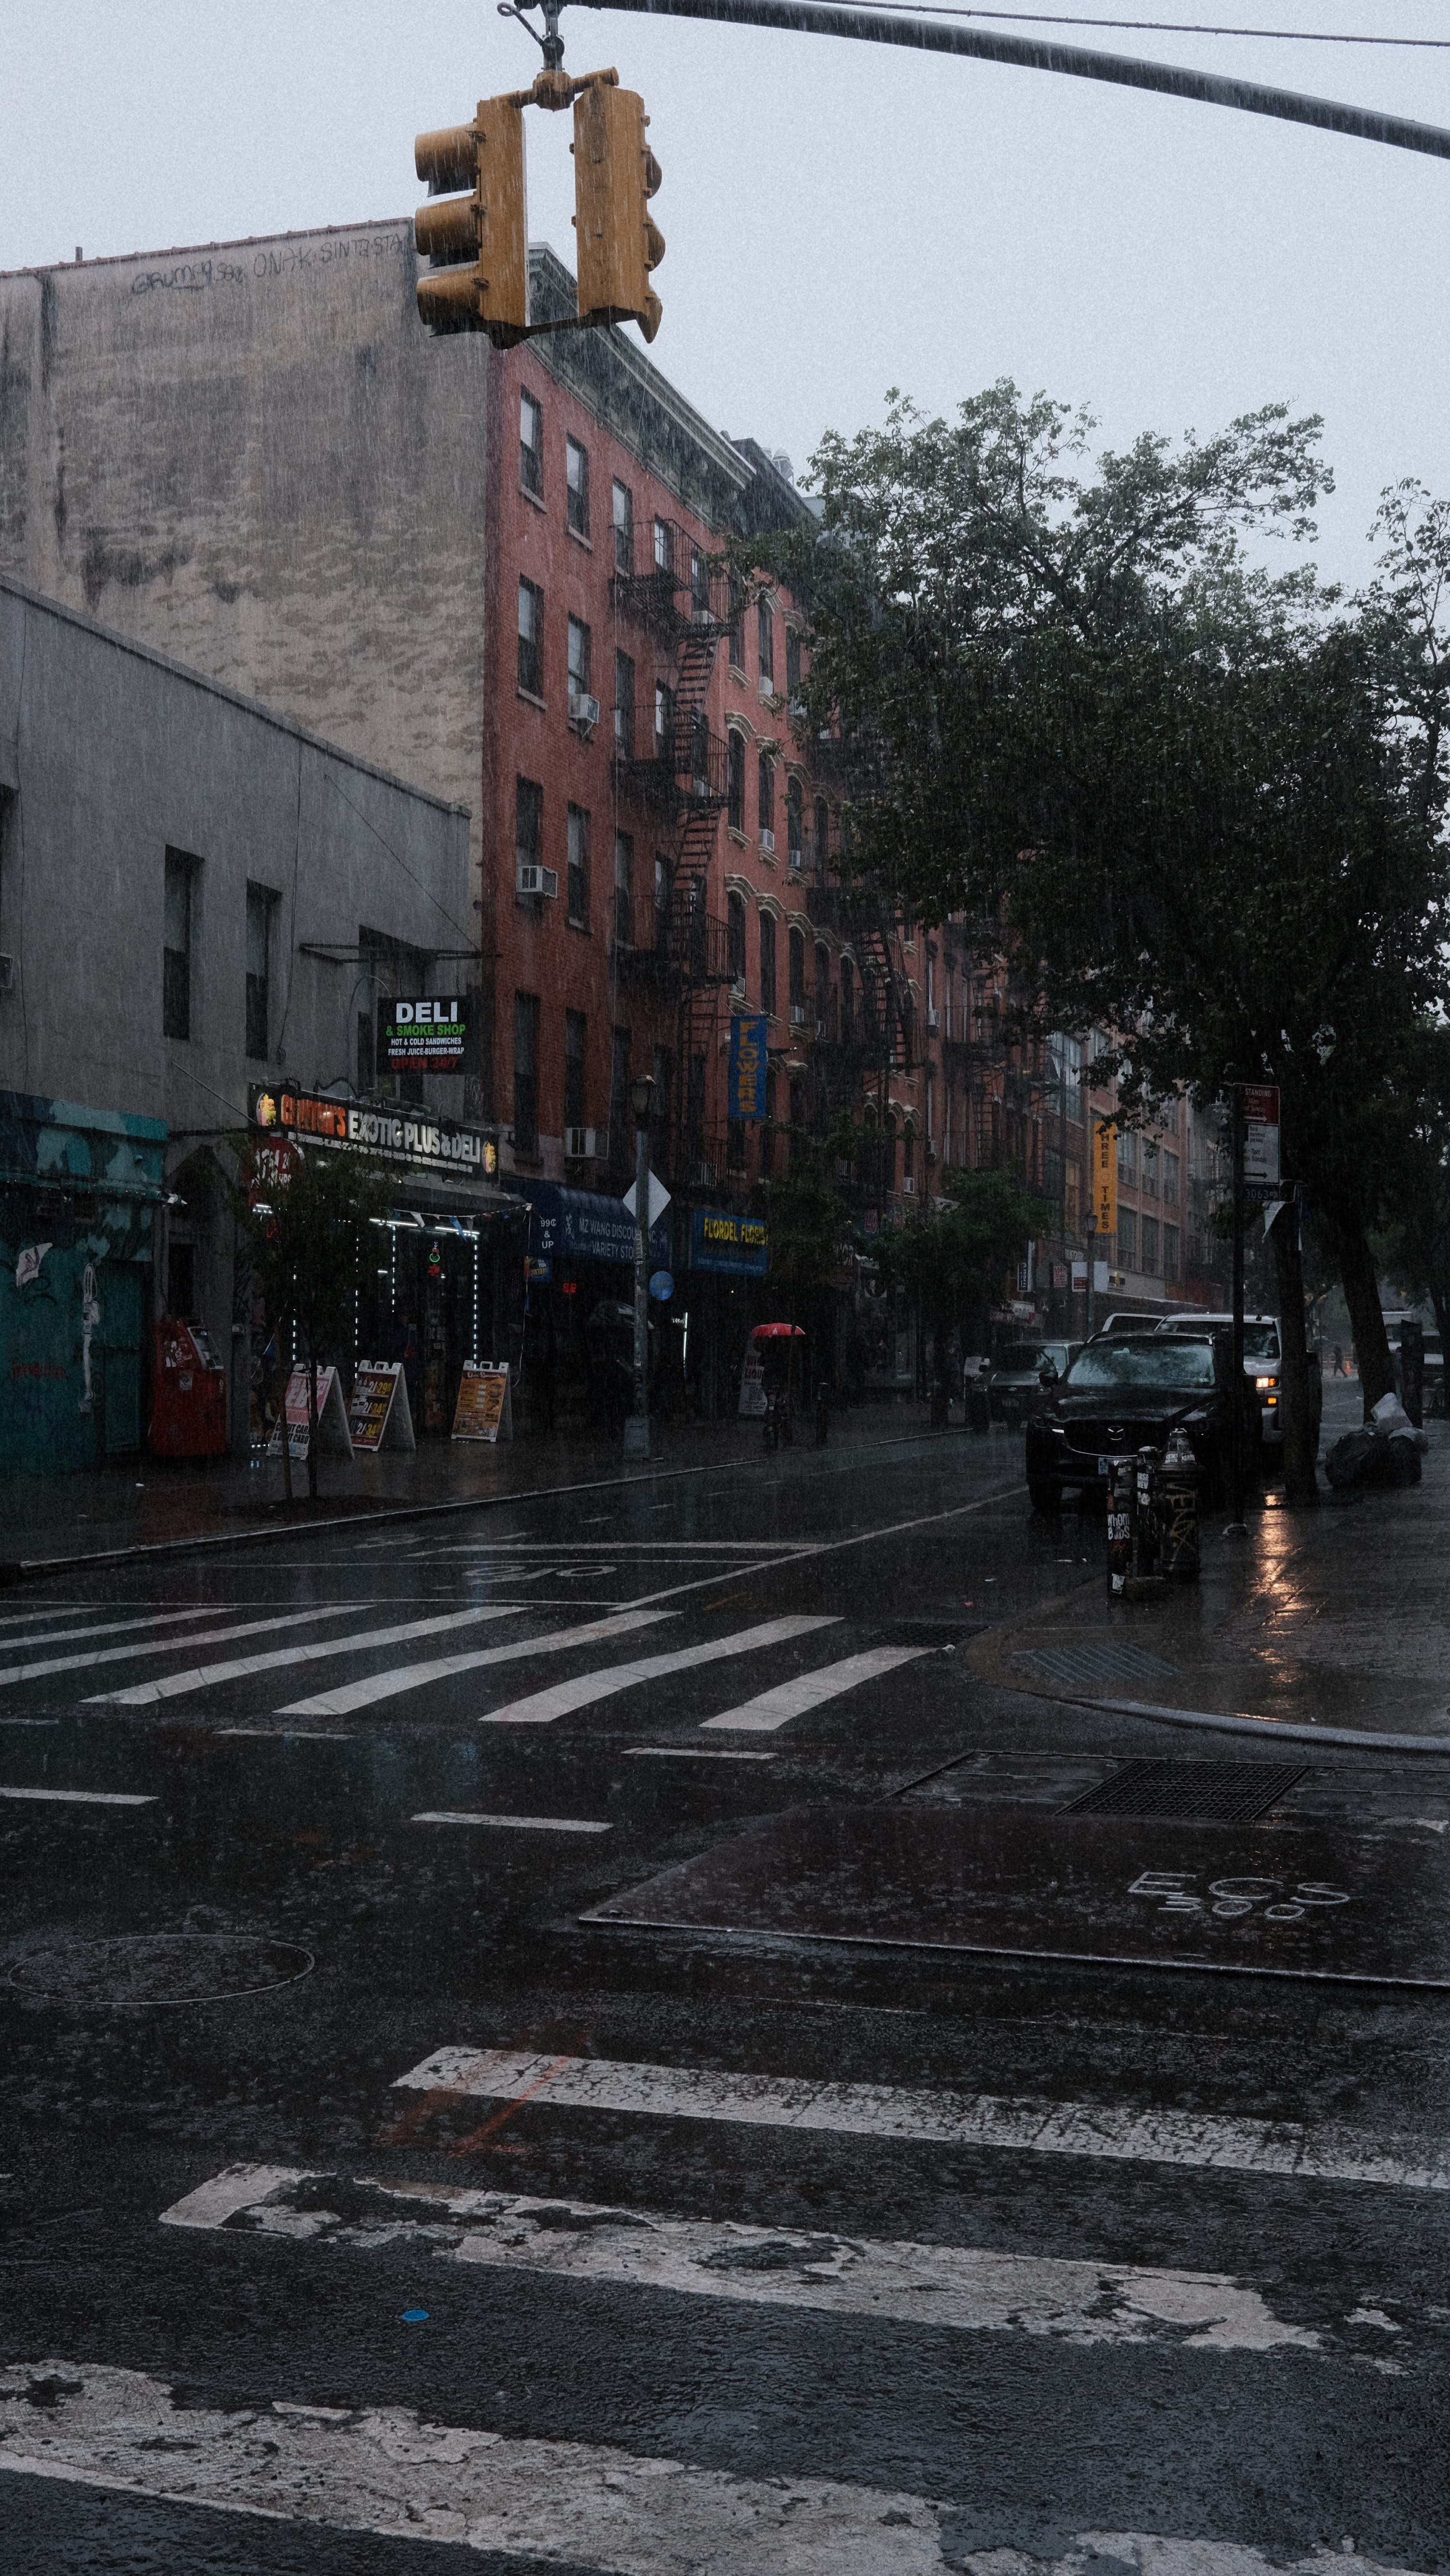 I like new york better when it rains